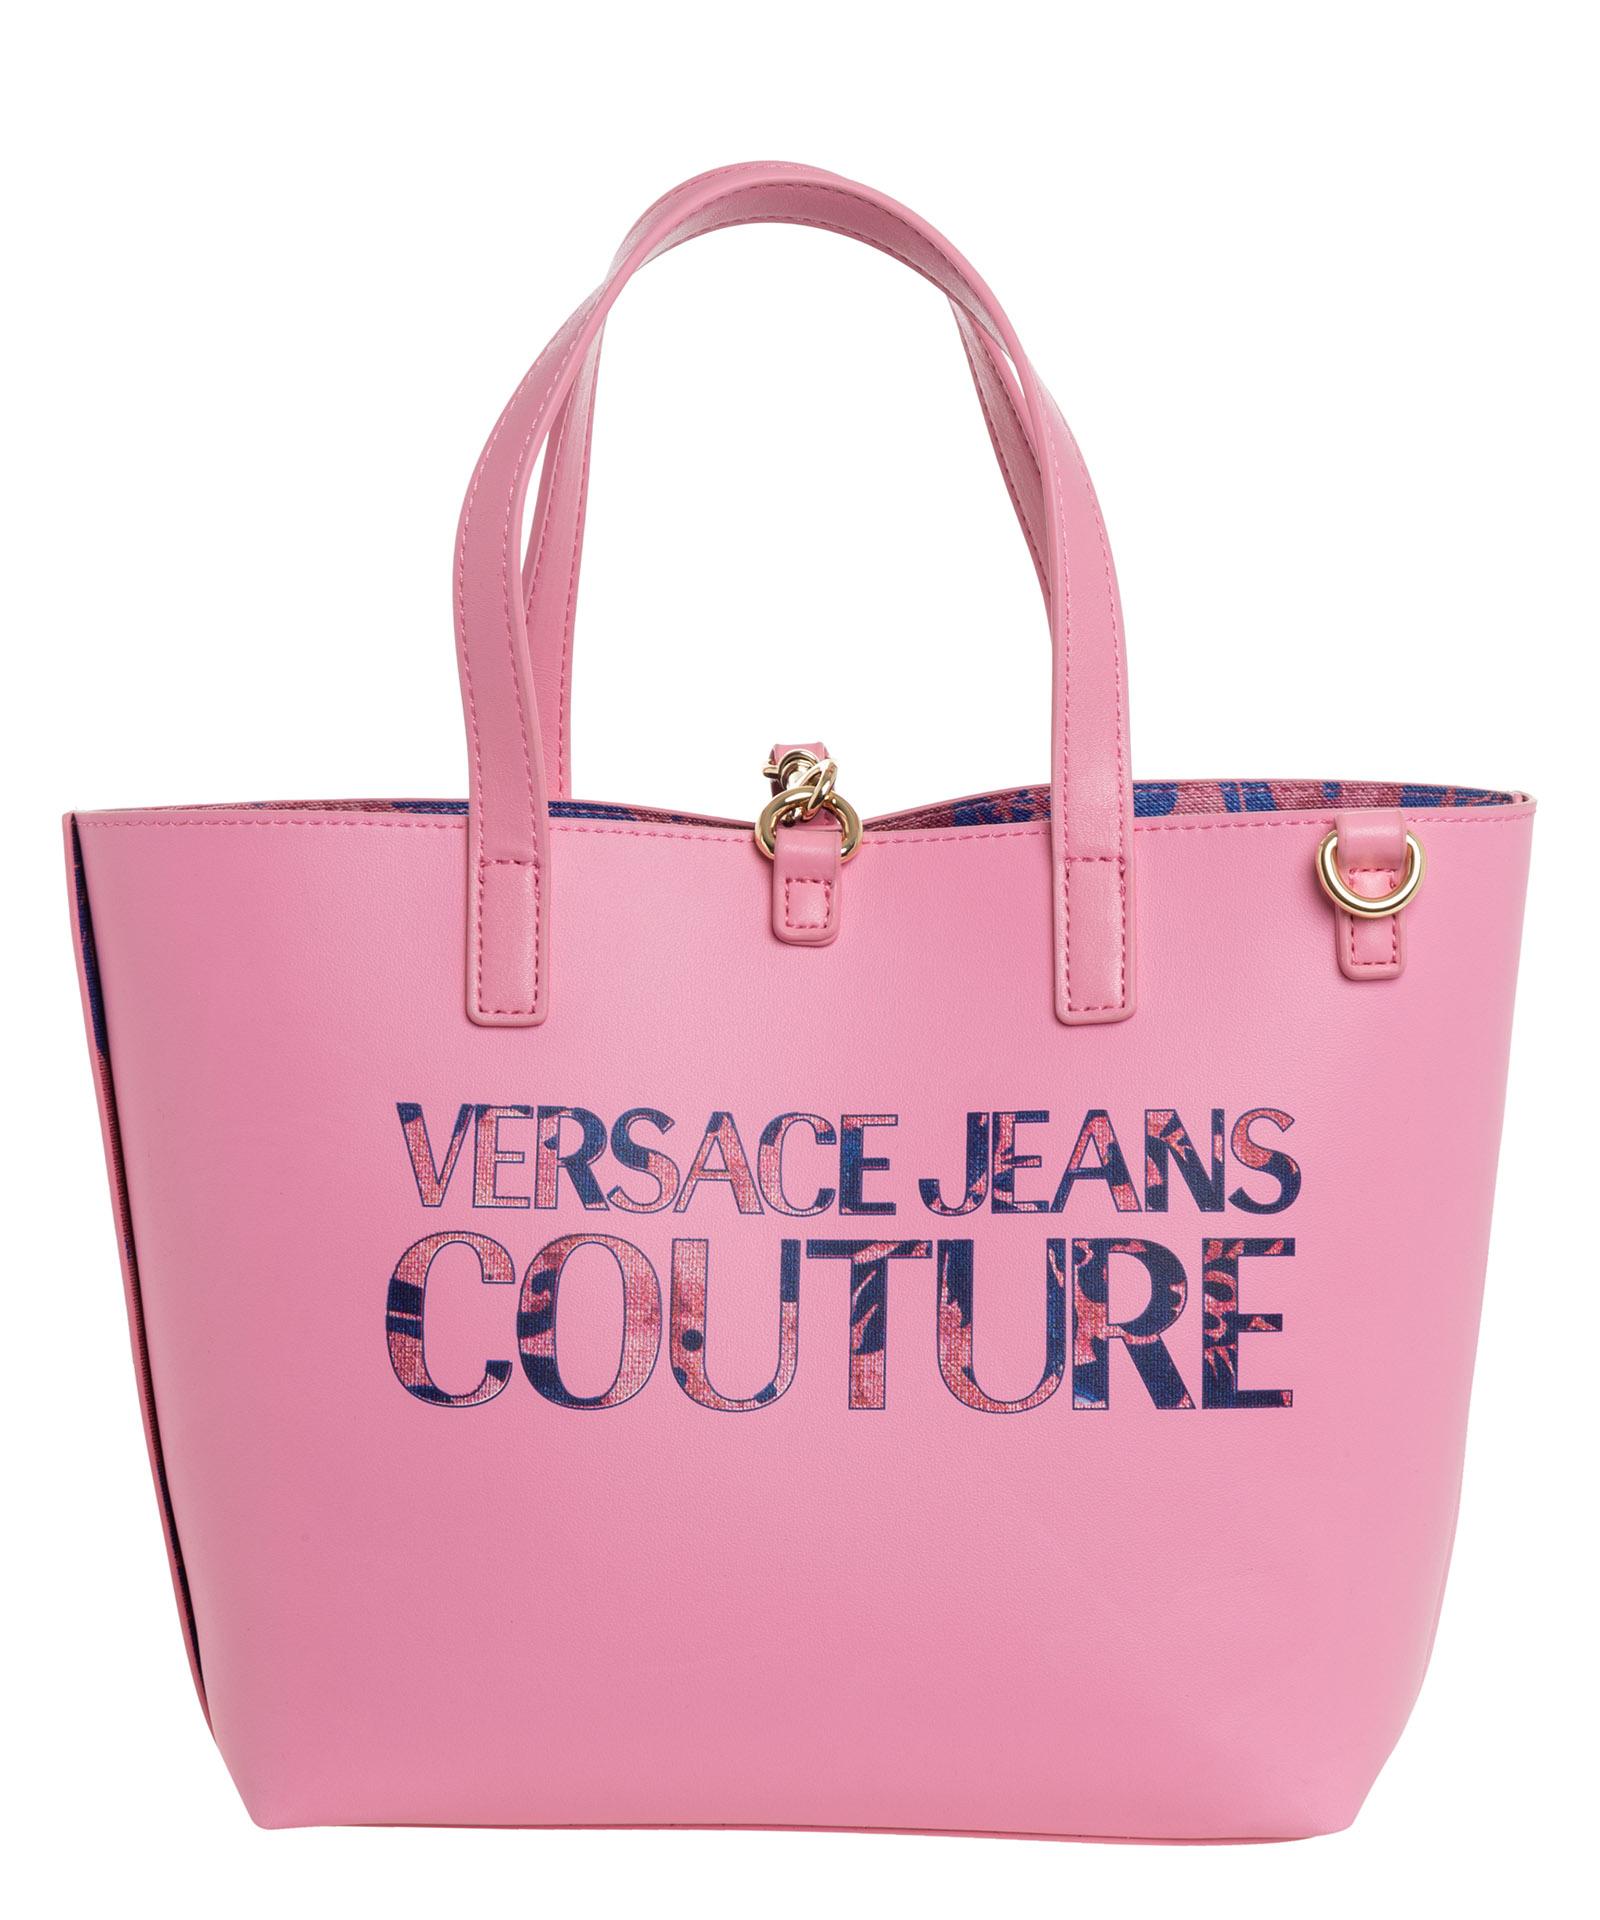 VERSACE JEANS COUTURE, Women's Handbag